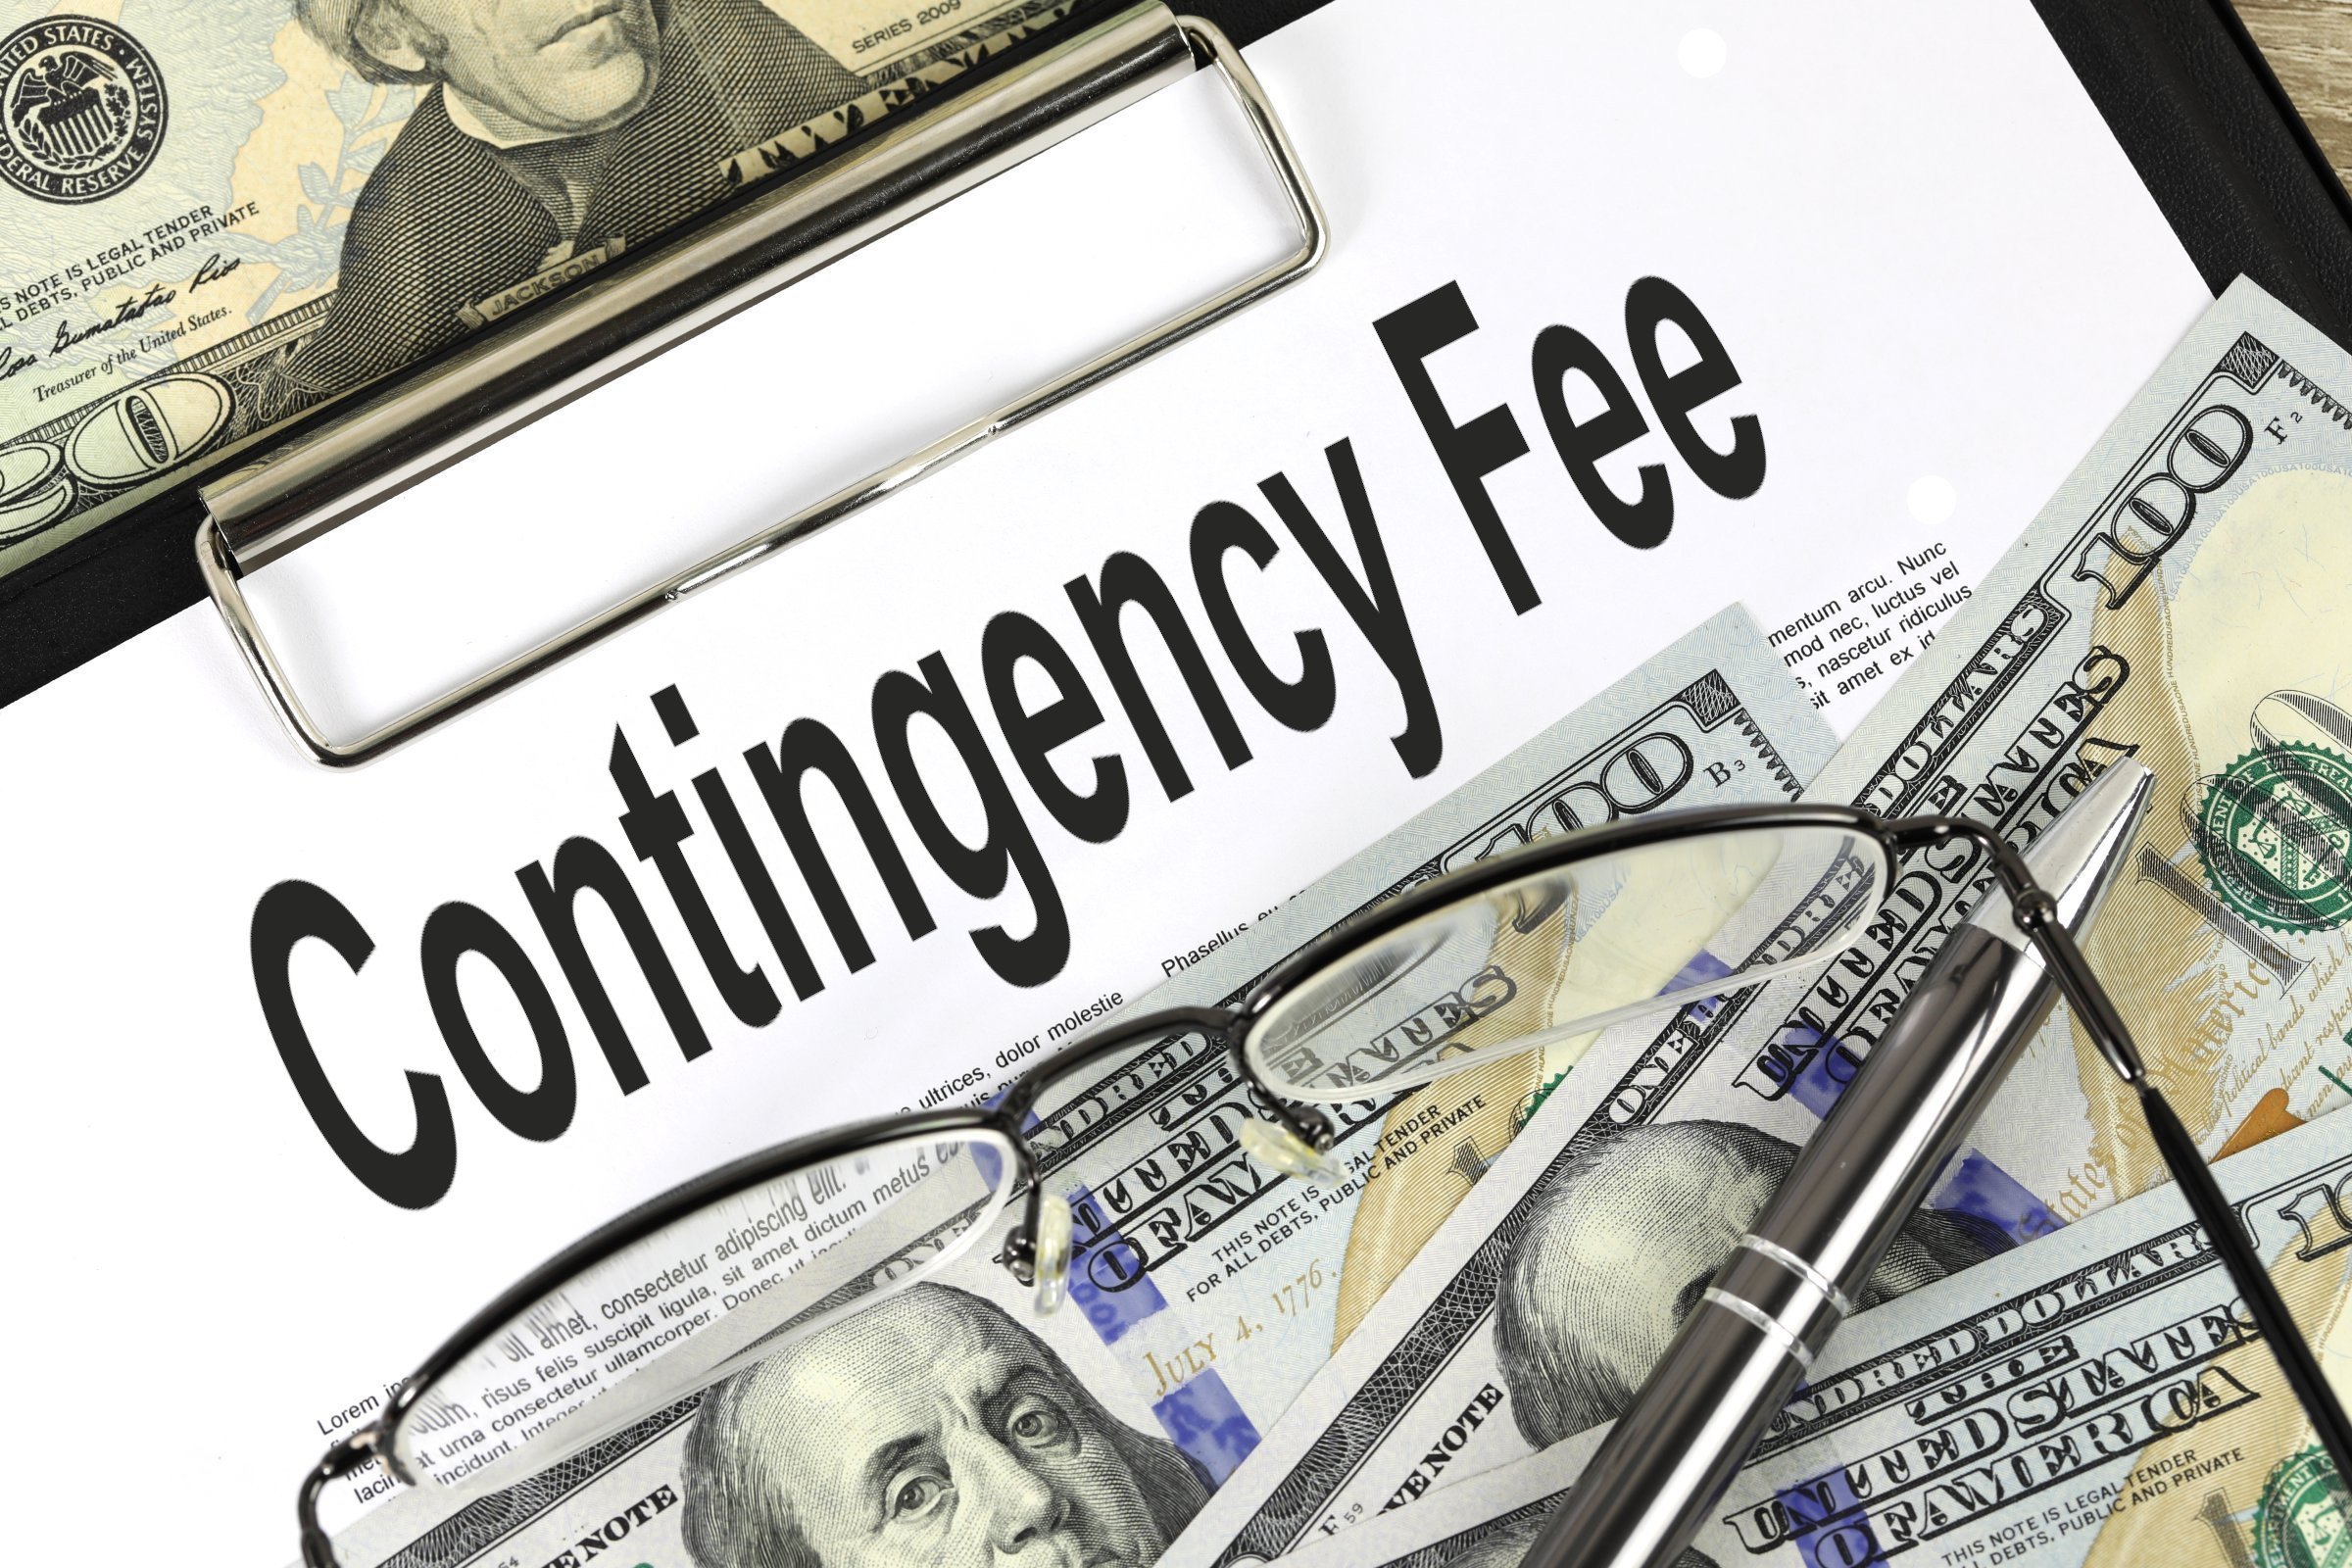 contingency fee